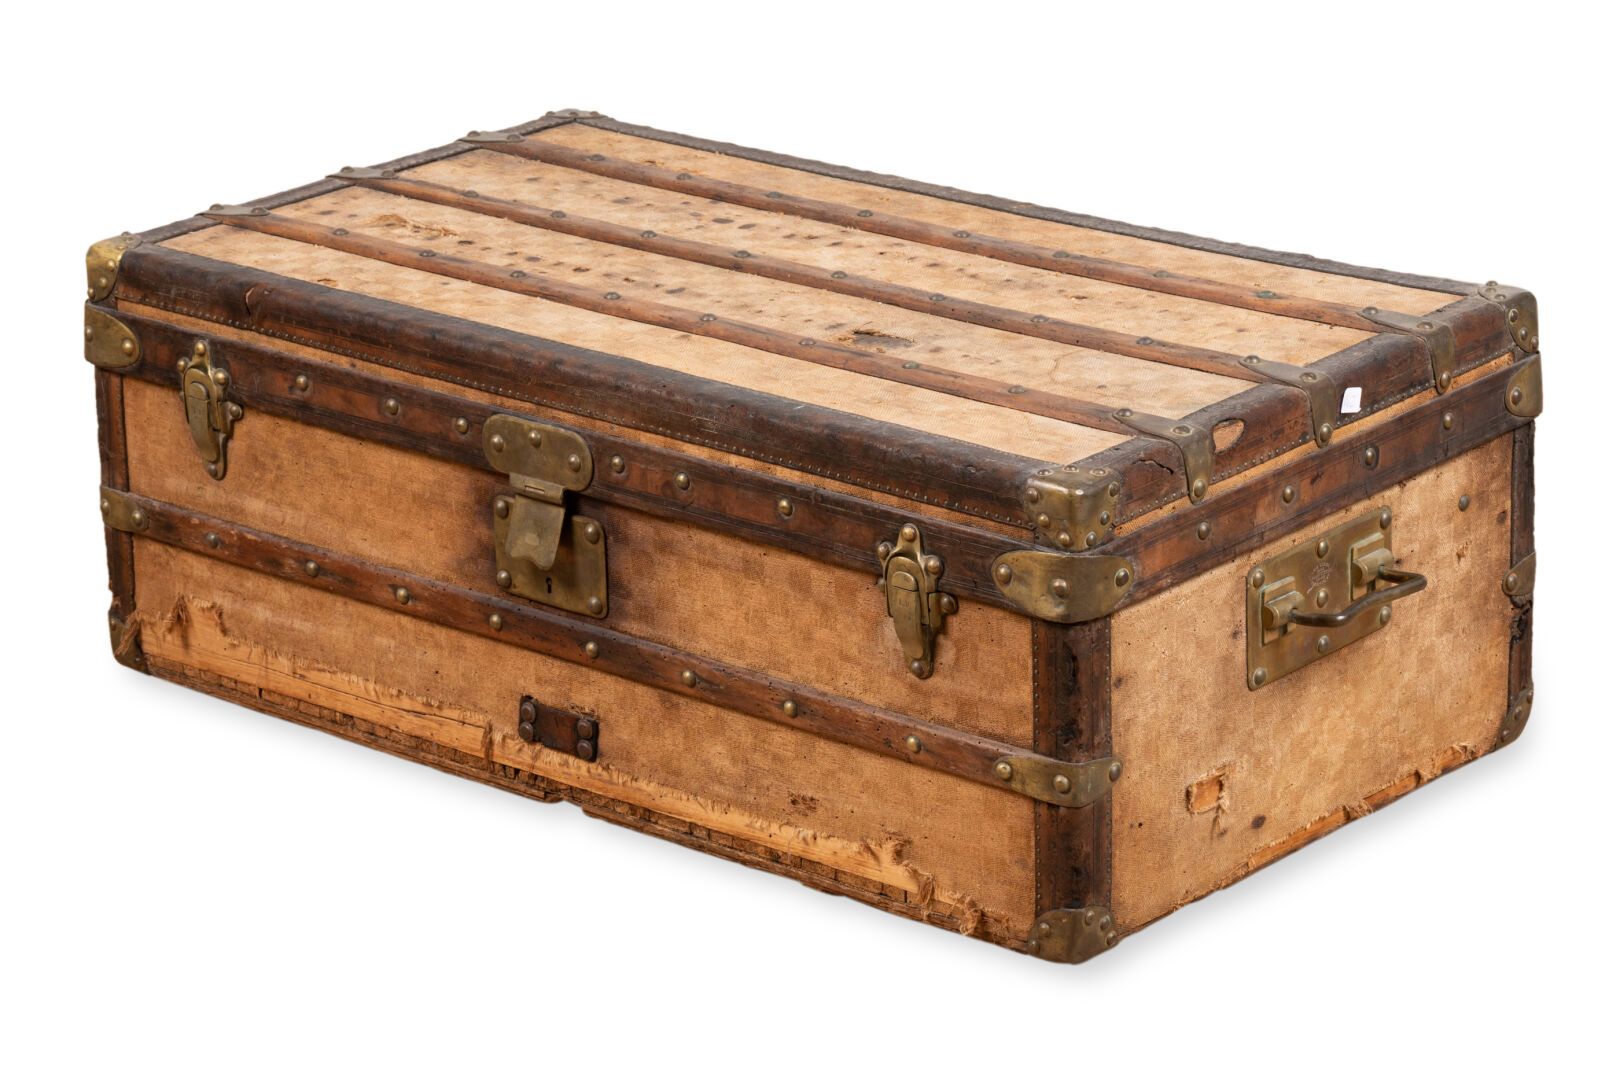 LOUIS VUITTON 棋盘式帆布旅行箱，天然皮革边缘，铜质手柄和锁。

木质加固装置

H.32厘米。宽92厘米。D. 50厘米

磨损、晒伤、撕裂、丢失